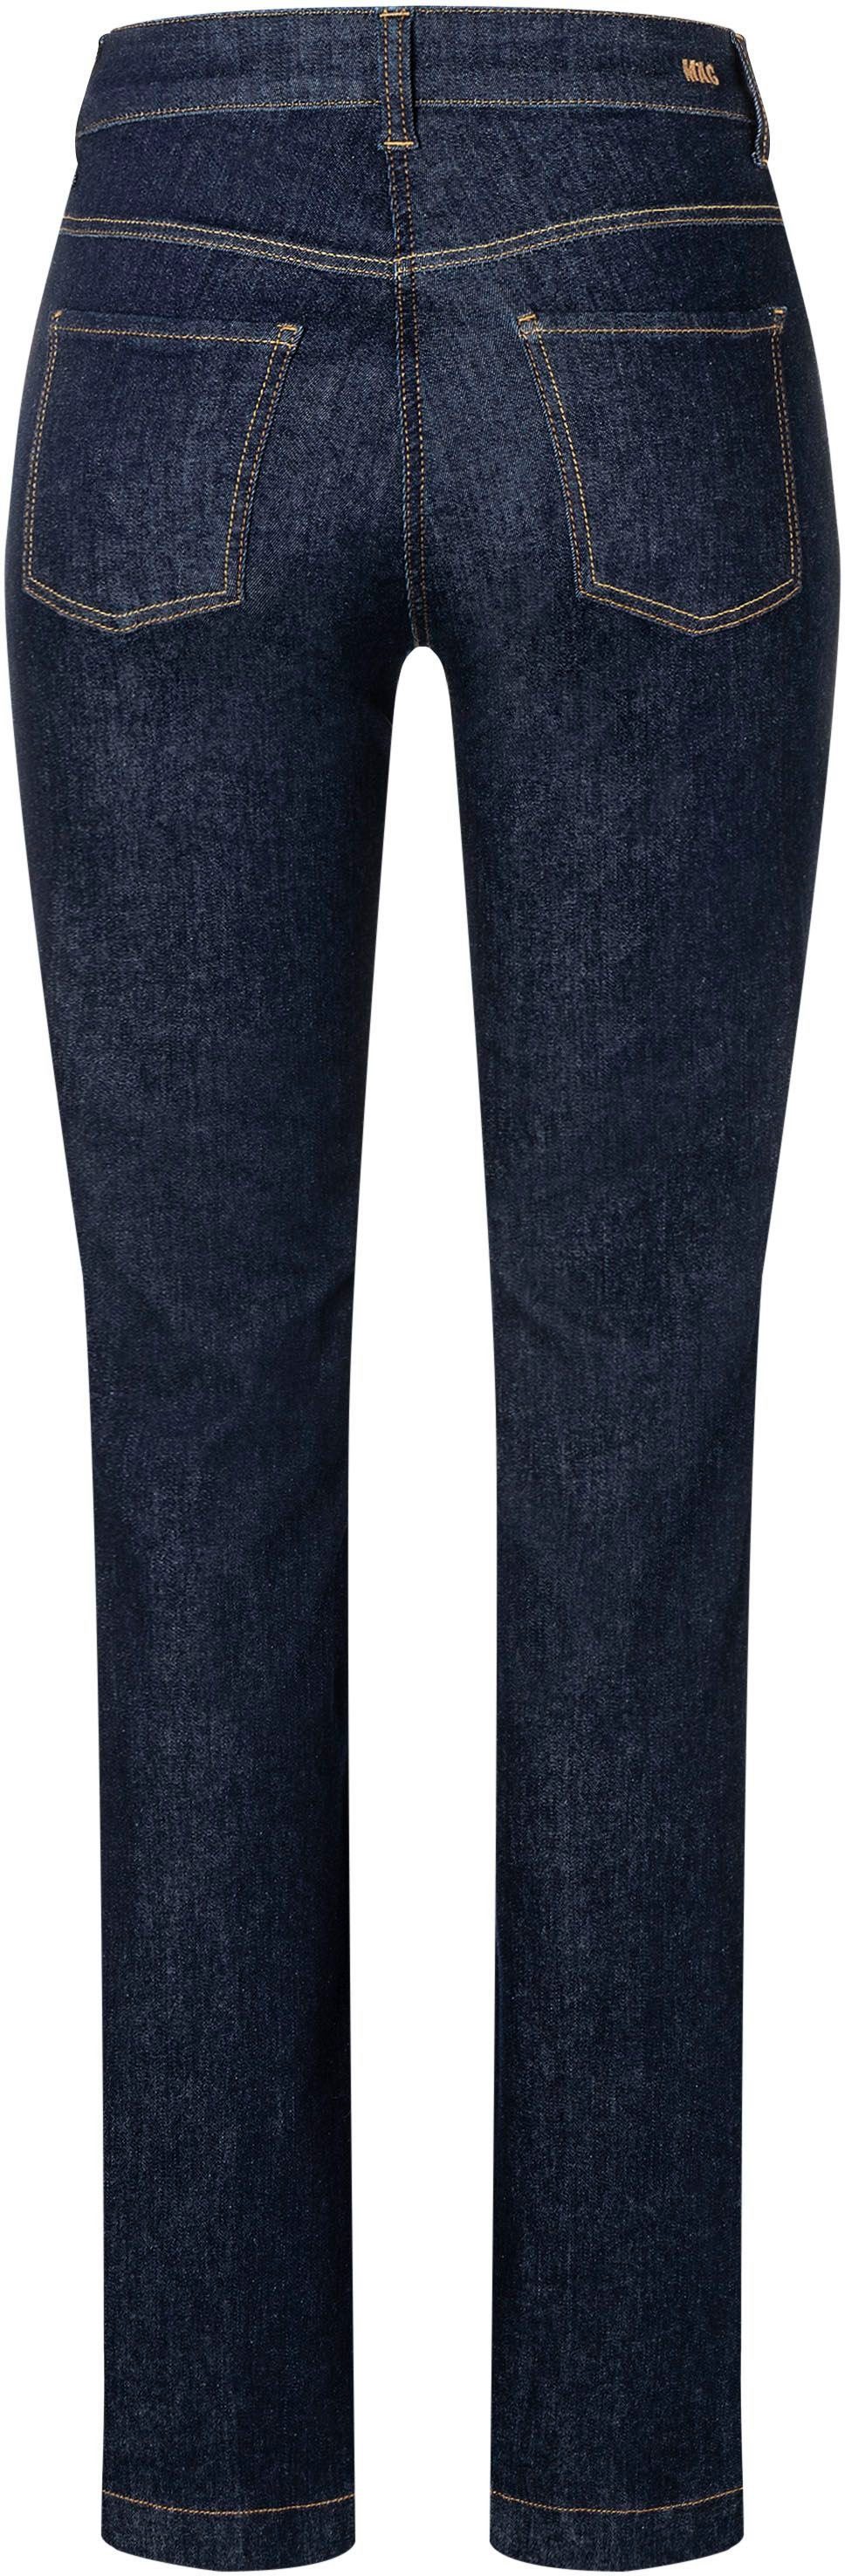 MAC High-waist jeans Boot in klassieke 5-pocketsstijl